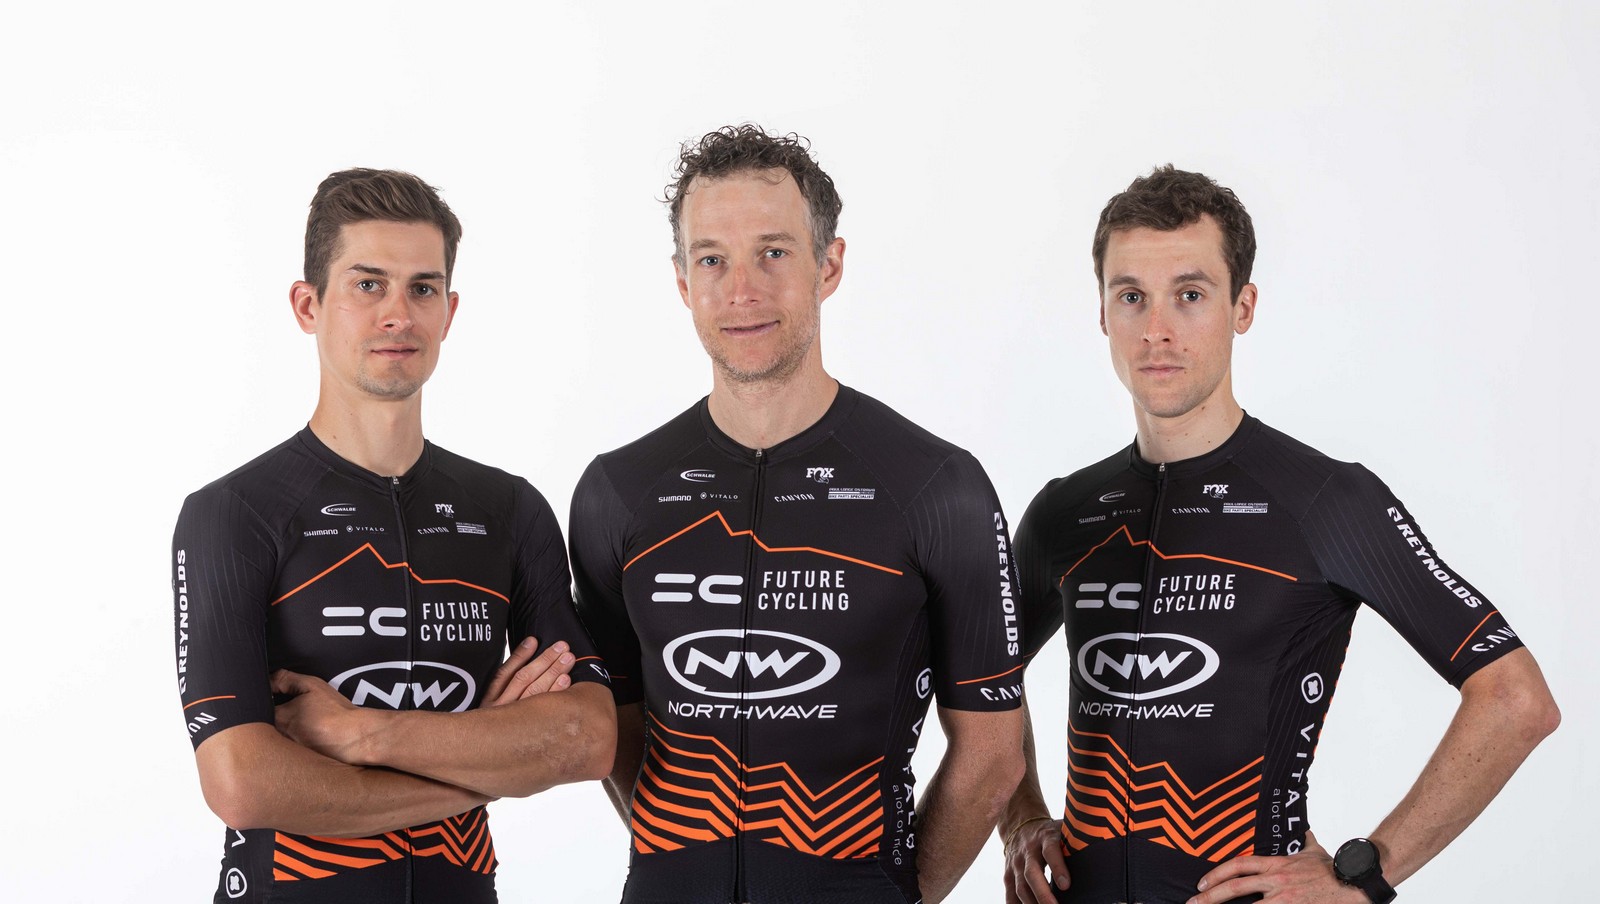 I membri del team Future Cycling - Northwave: Hynek, Stosek e Buksa